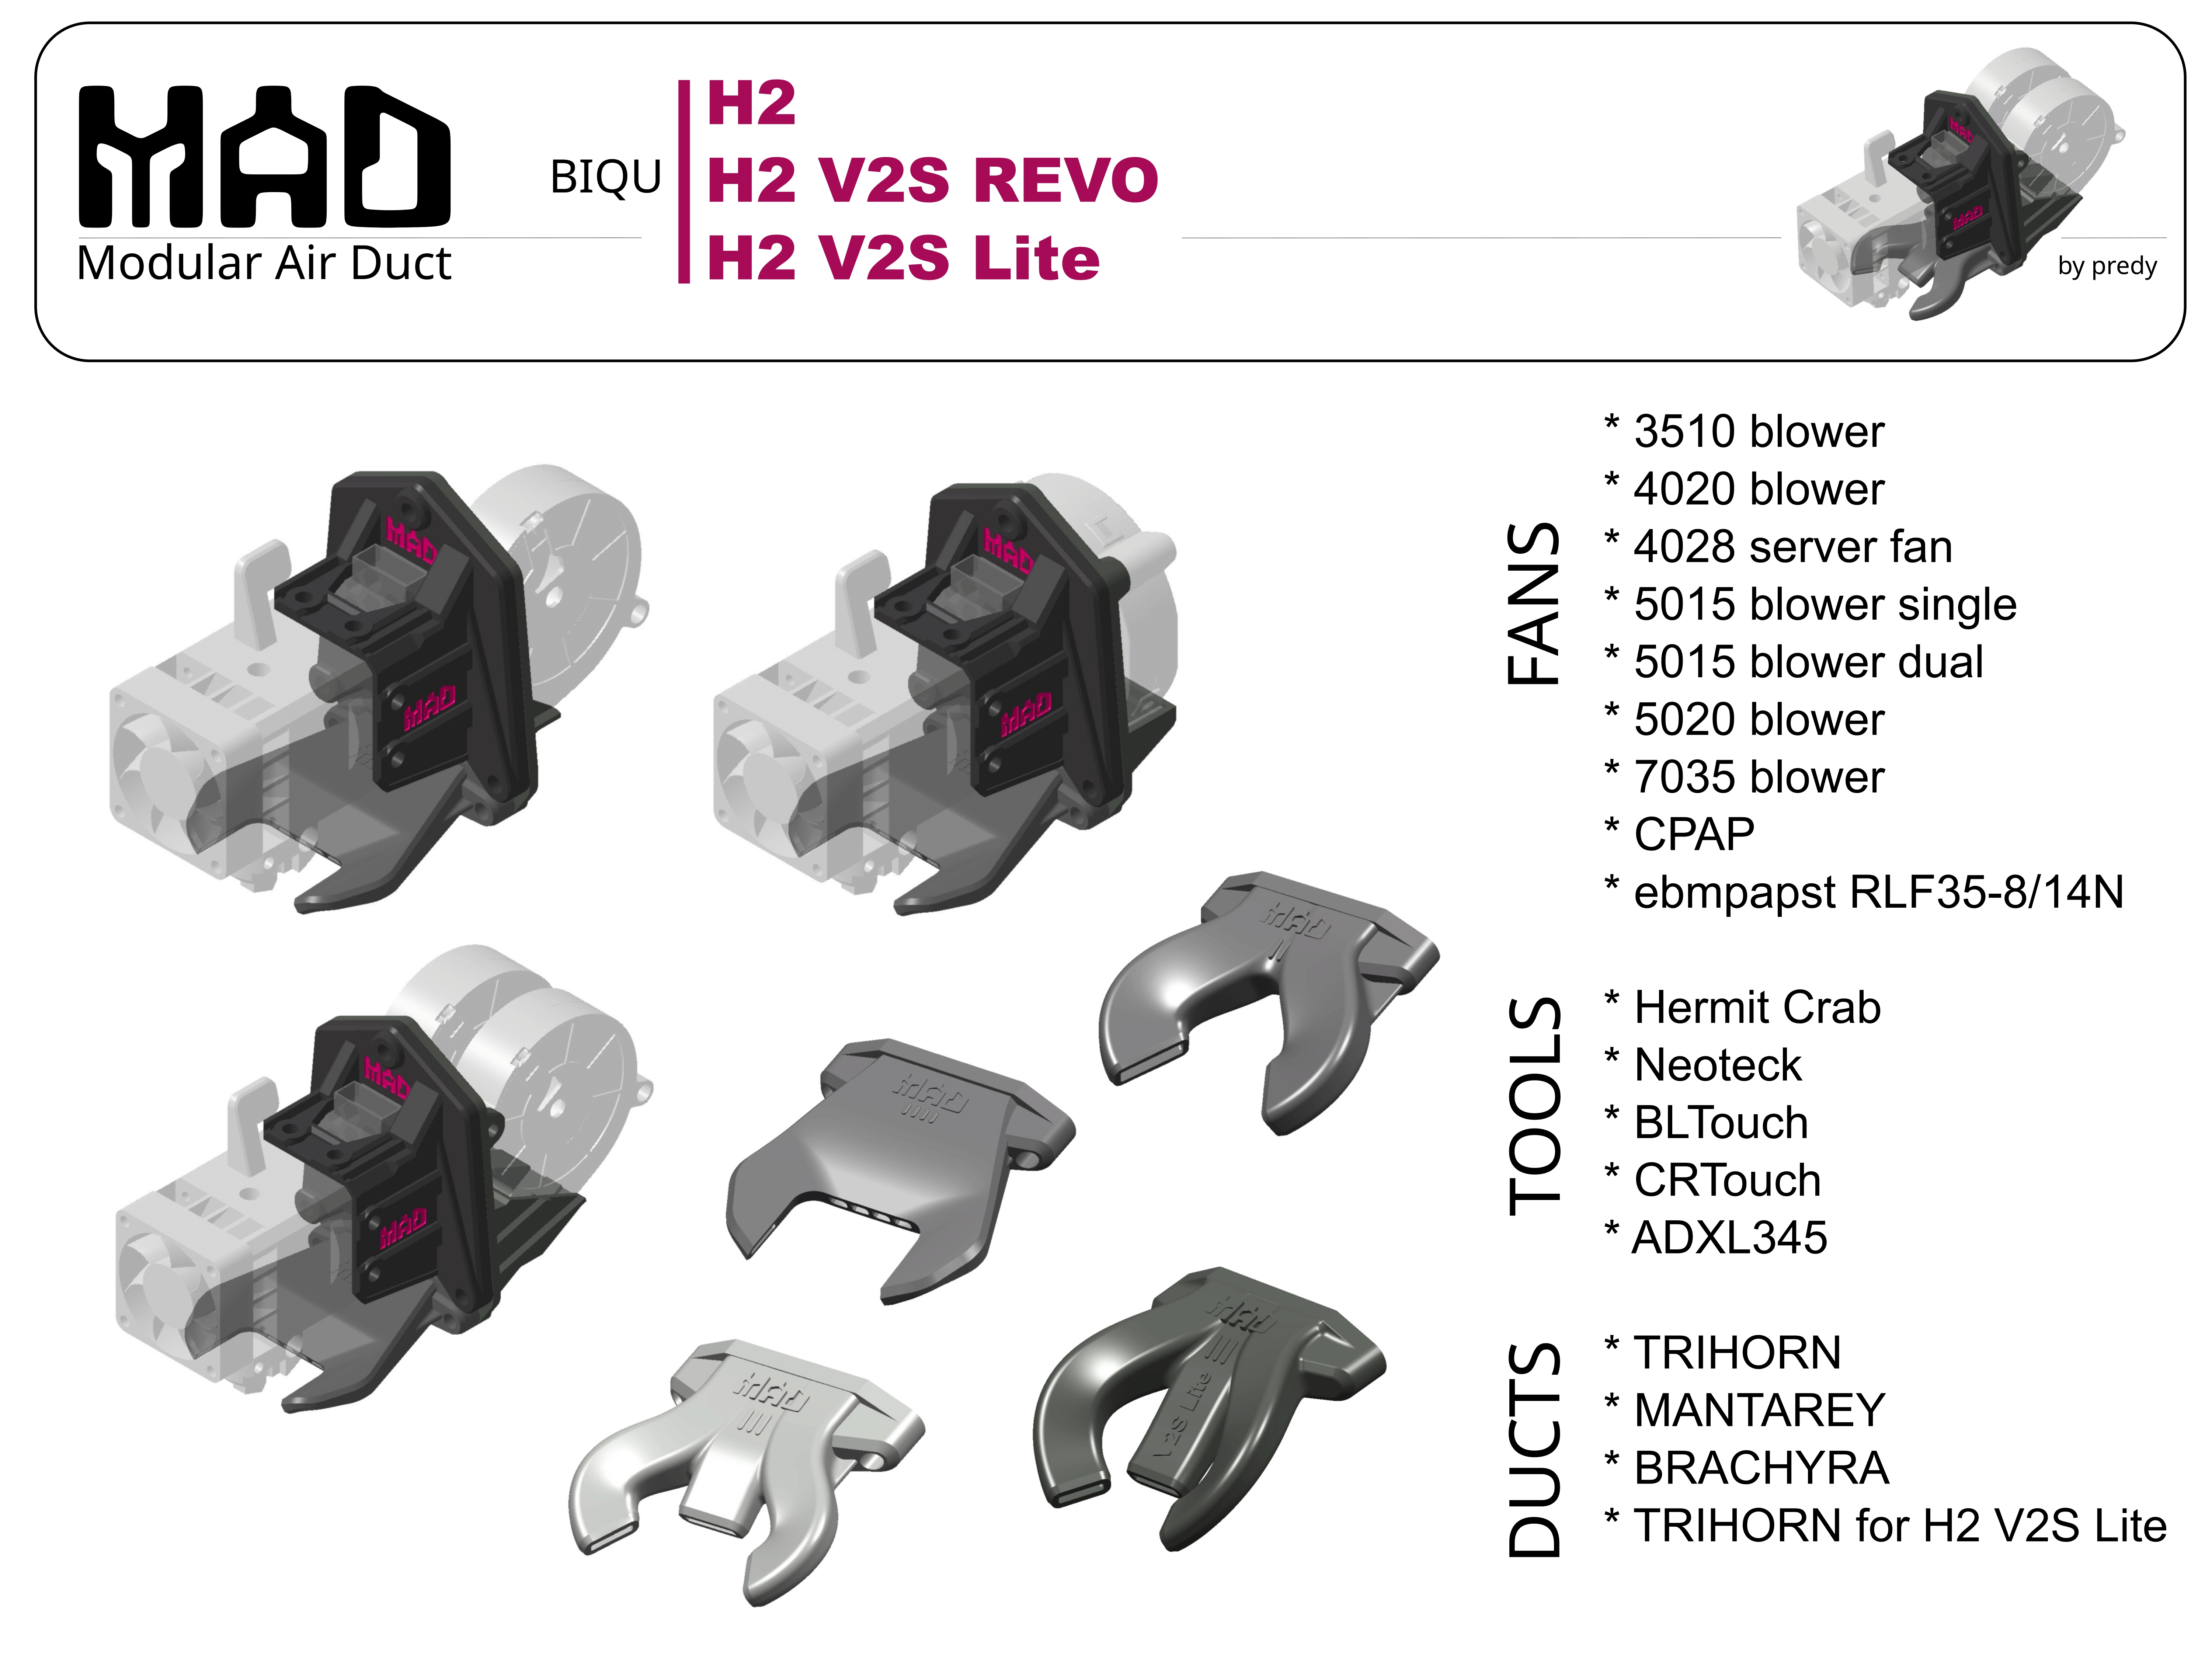 MAD - Modular Air Duct for BIQU H2 / H2 V2S REVO / H2 V2S Lite